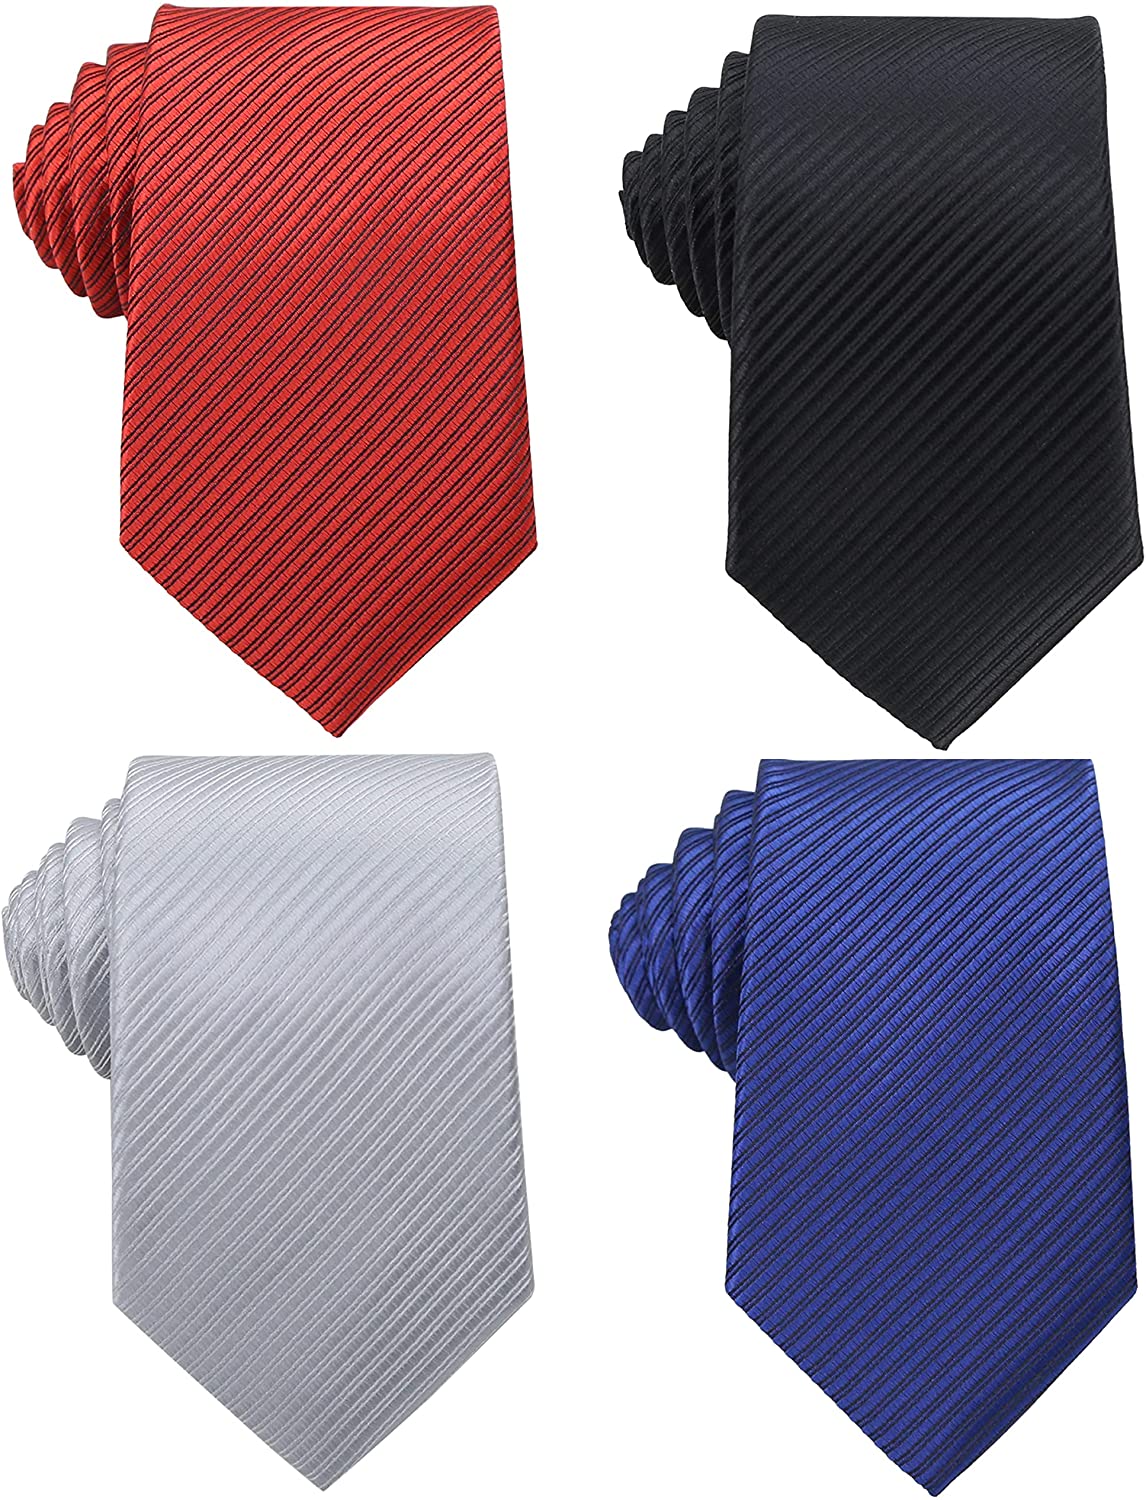 WeiShang Lot 6 PCS Classic Men's Silk Tie Necktie Woven JACQUARD